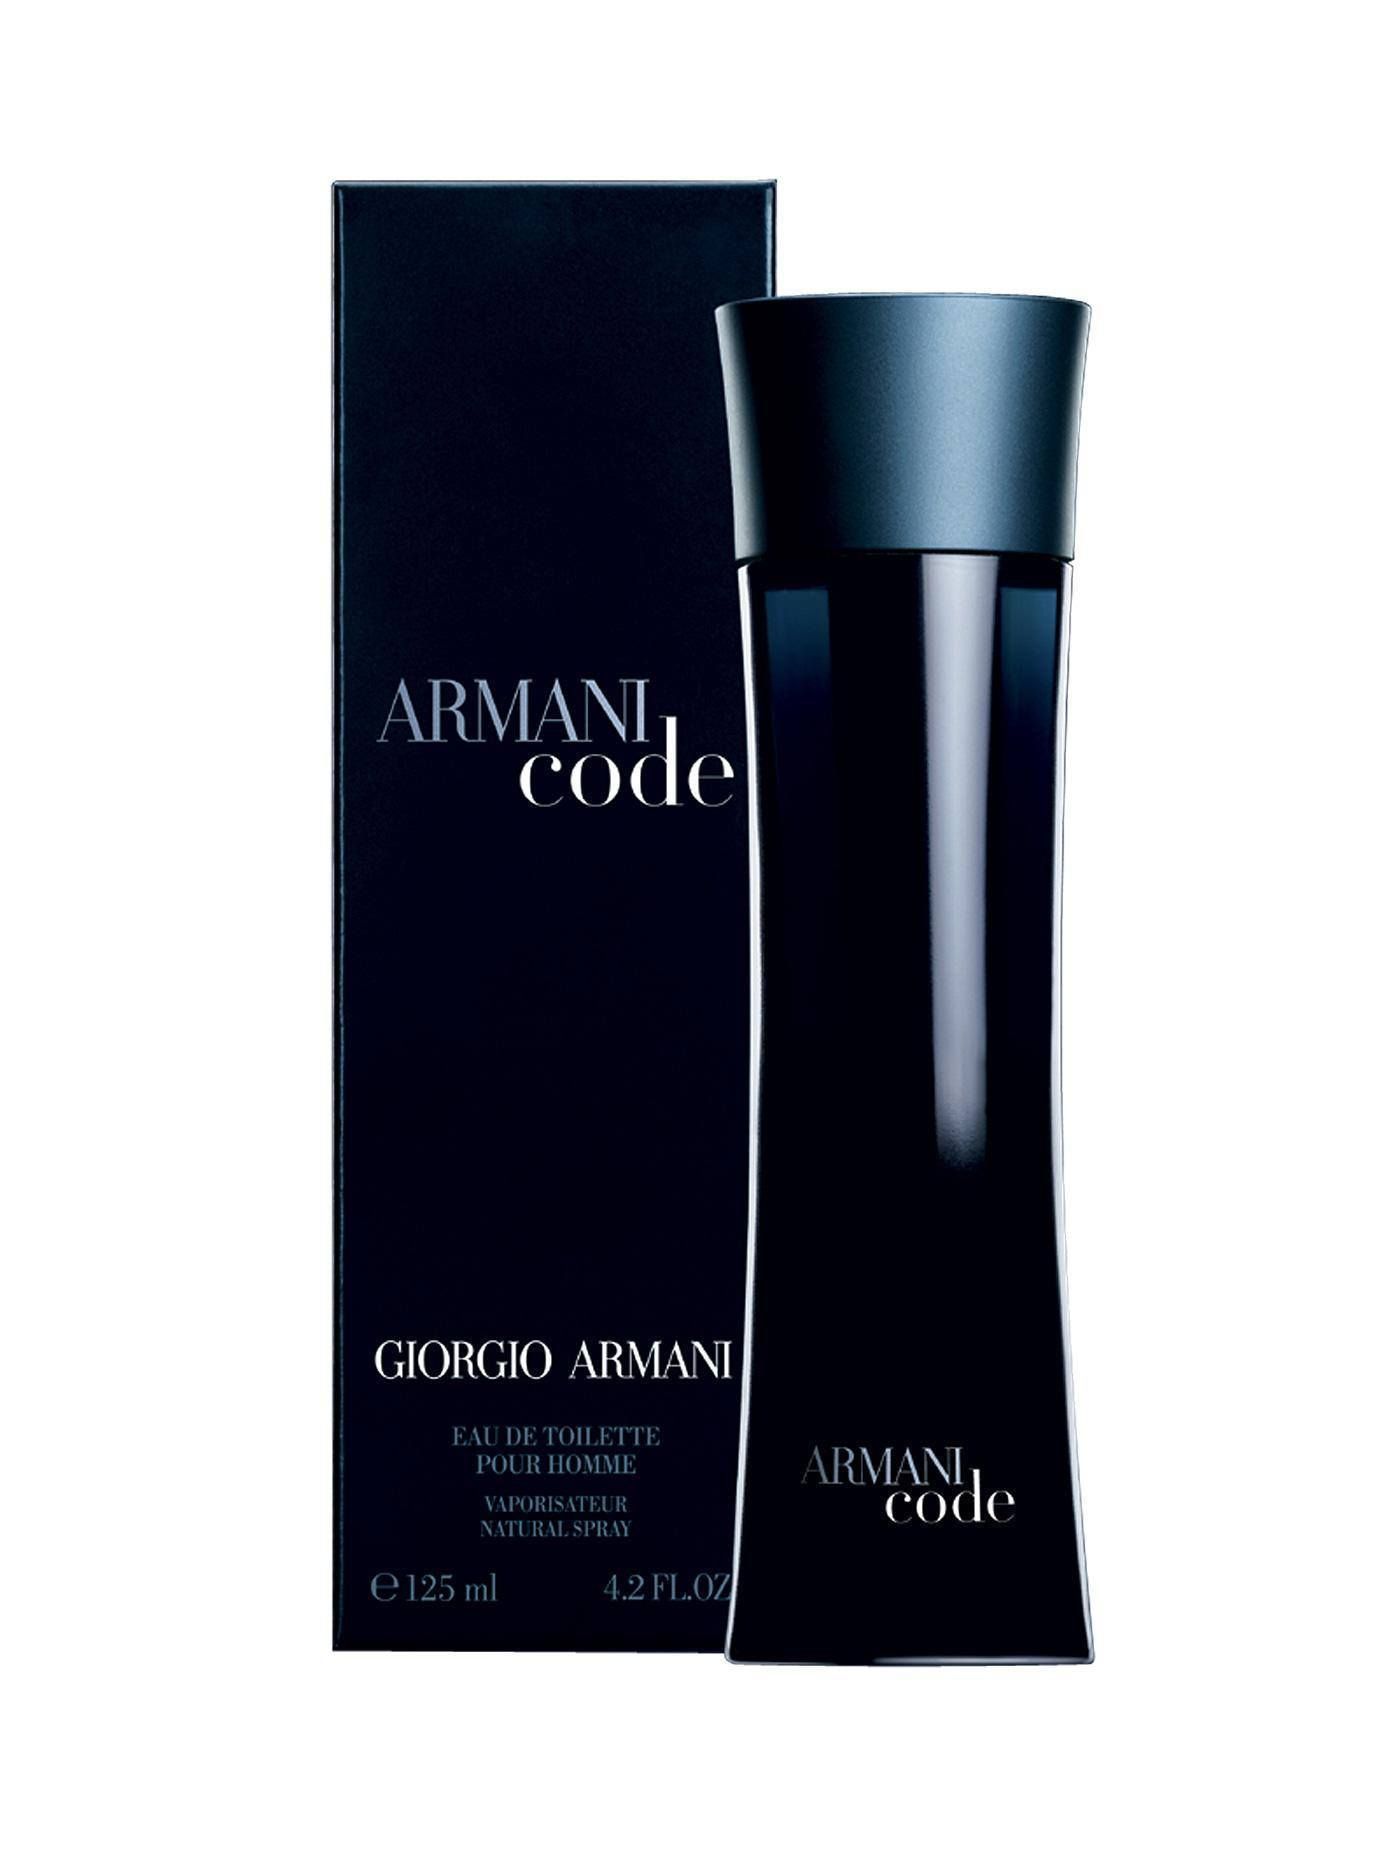 armani code perfume ingredients